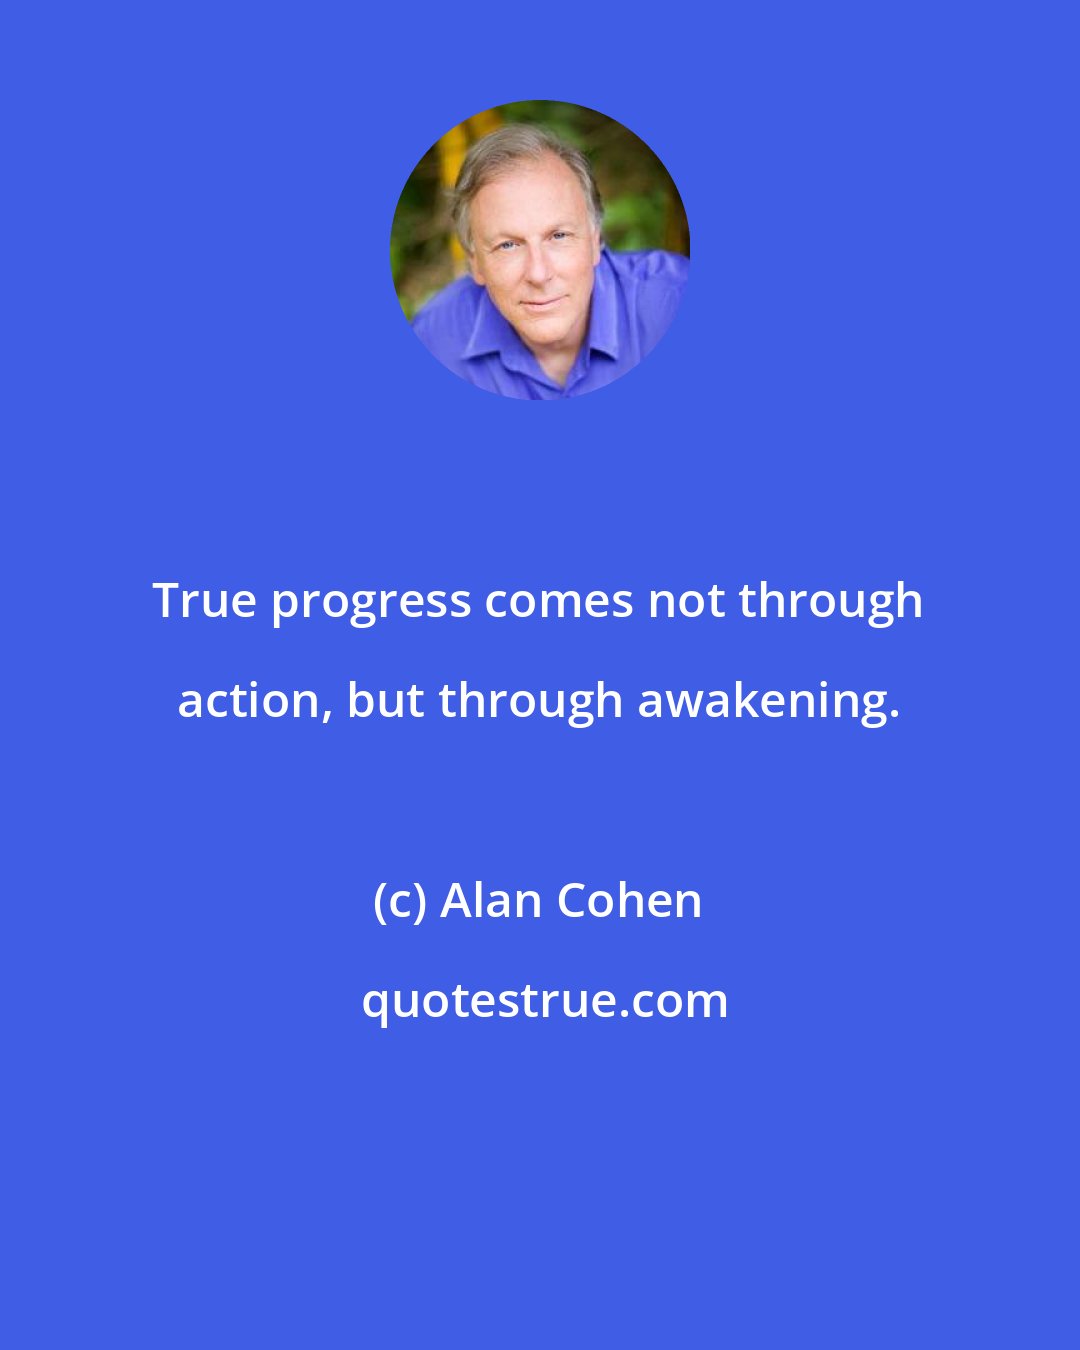 Alan Cohen: True progress comes not through action, but through awakening.